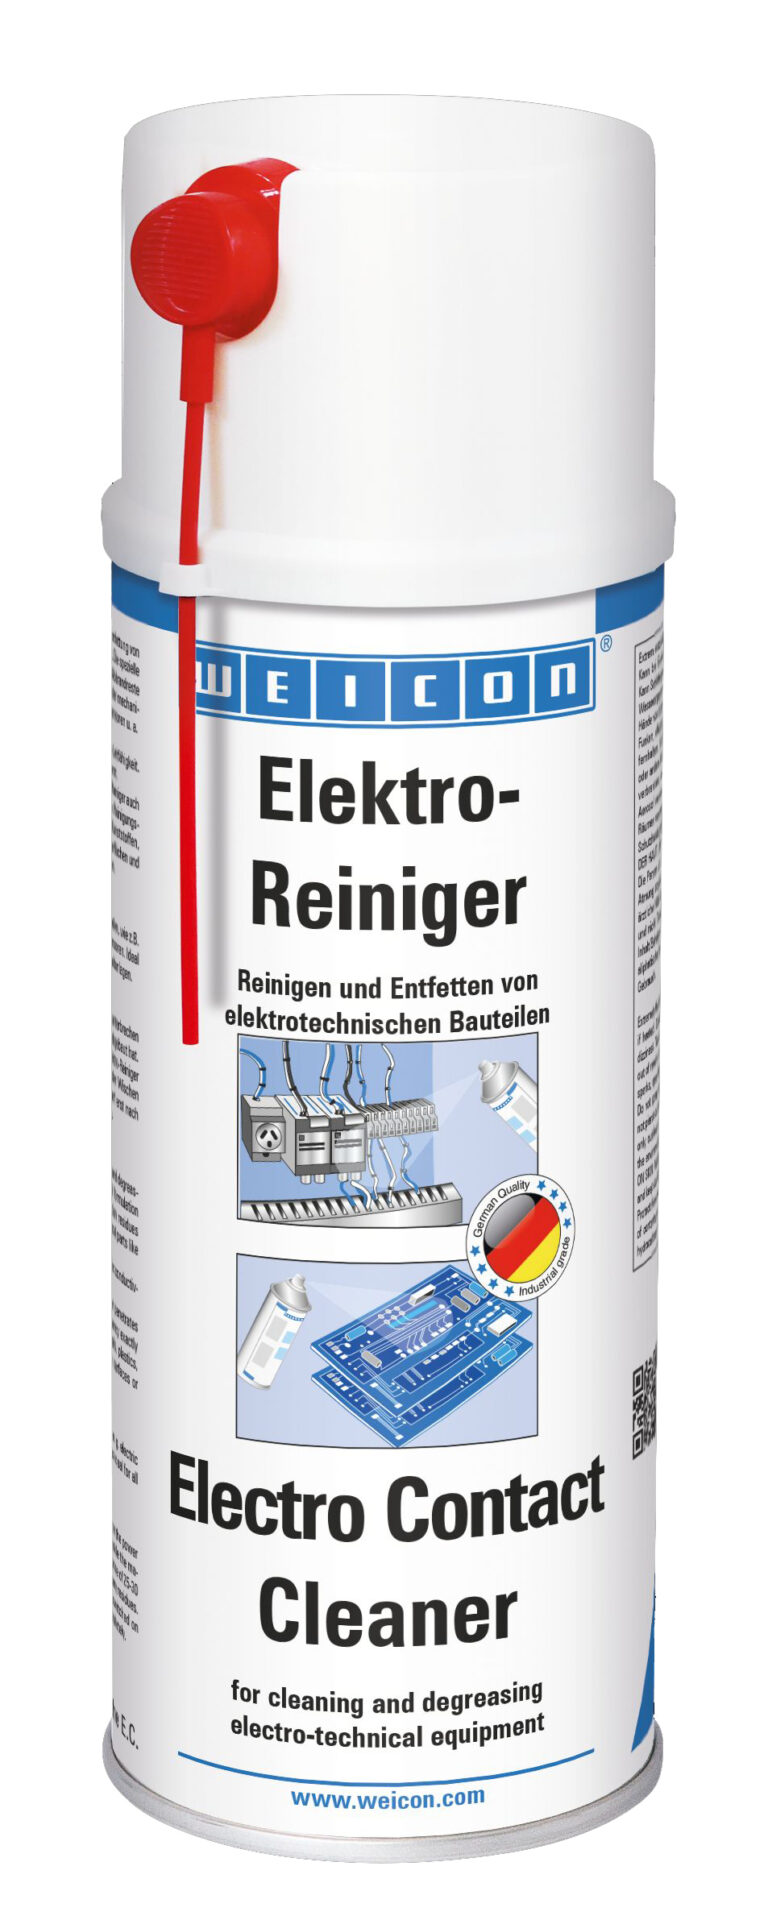 Electro-Reiniger